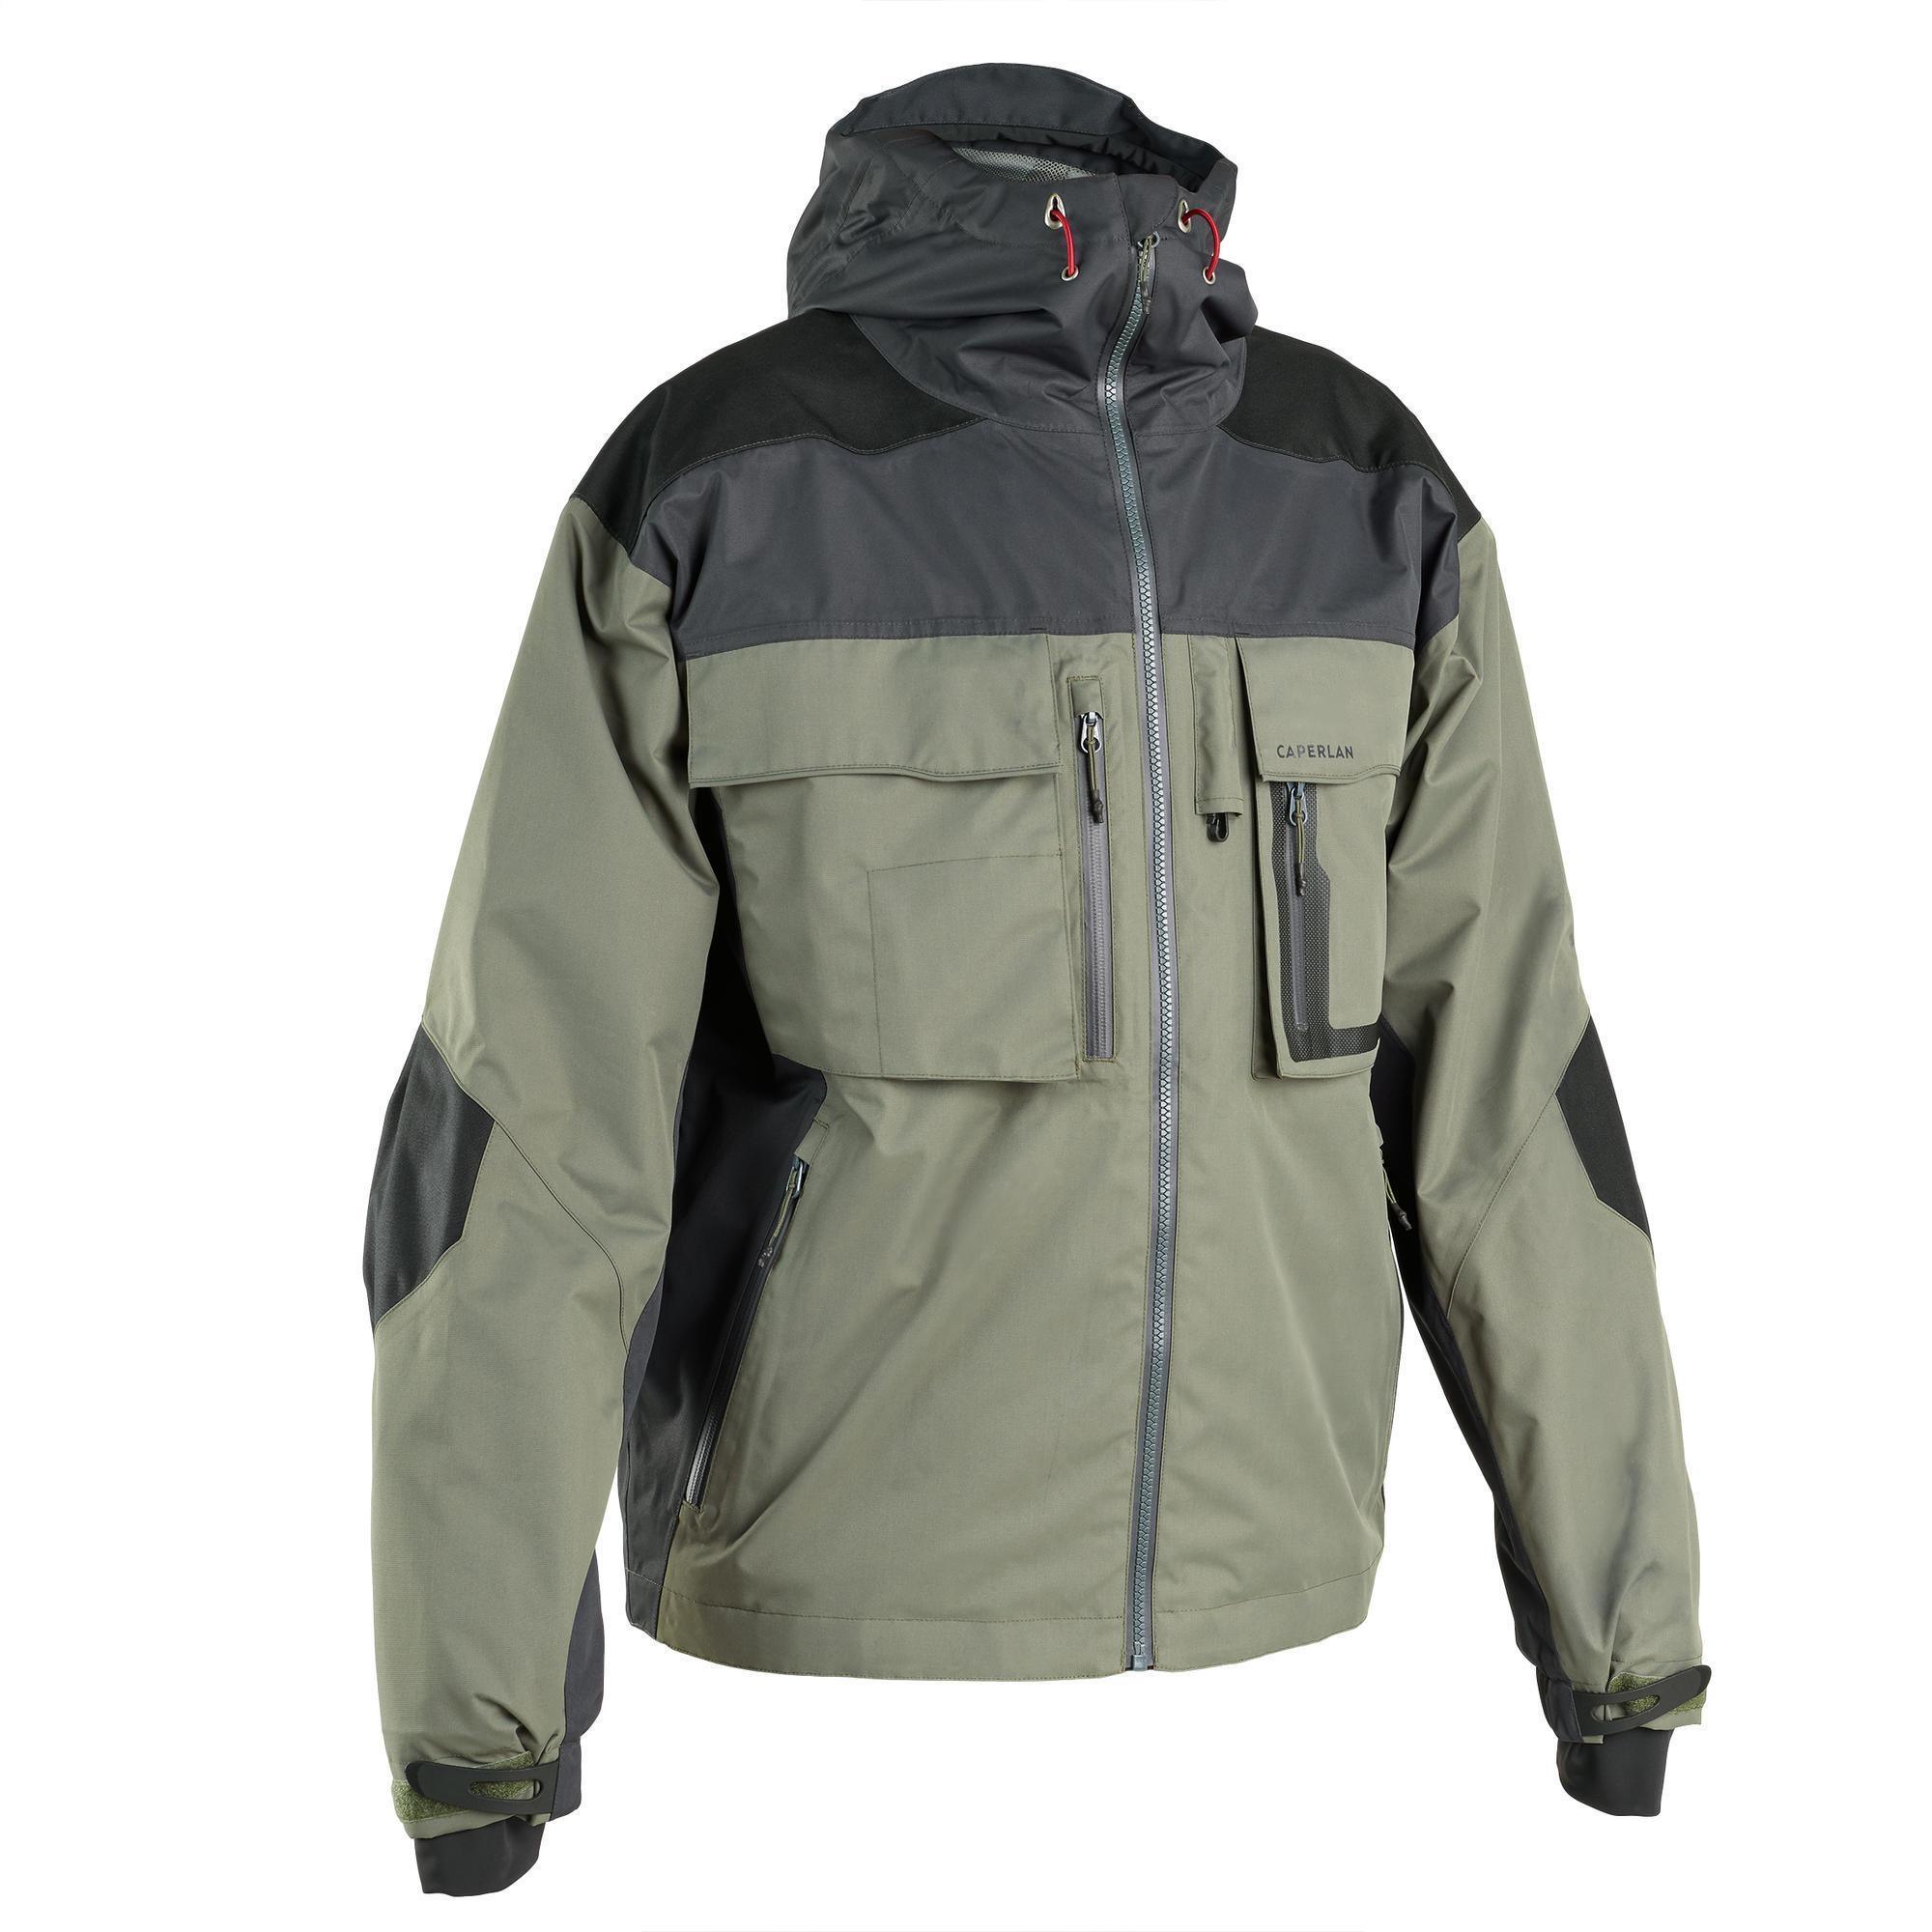 CAPERLAN Waterproof fishing jacket 500 Khaki